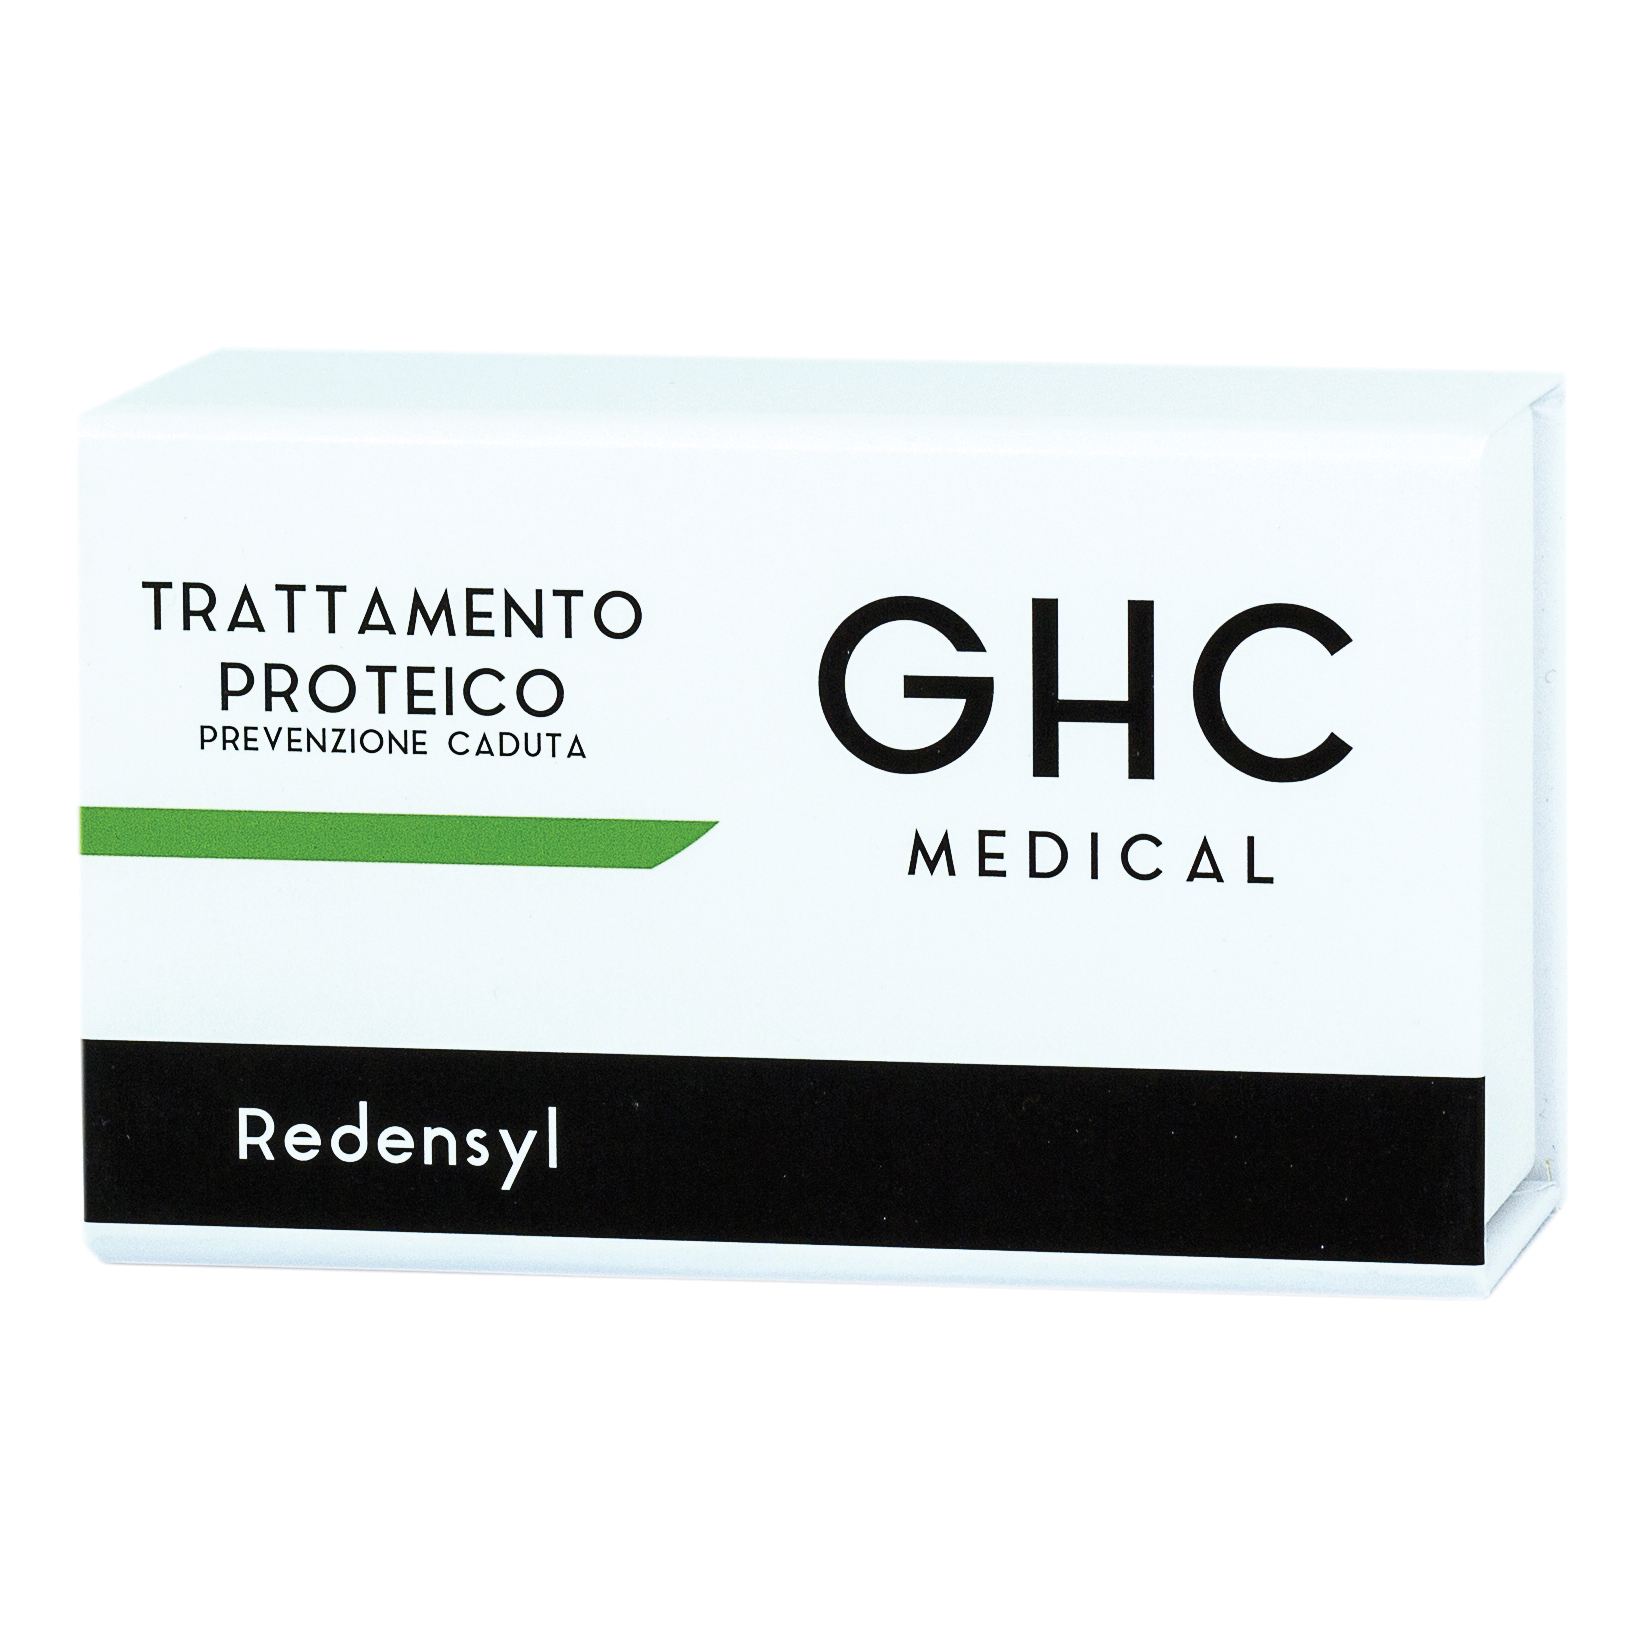 Image of Trattamento Proteico GHC MEDICAL 100ml